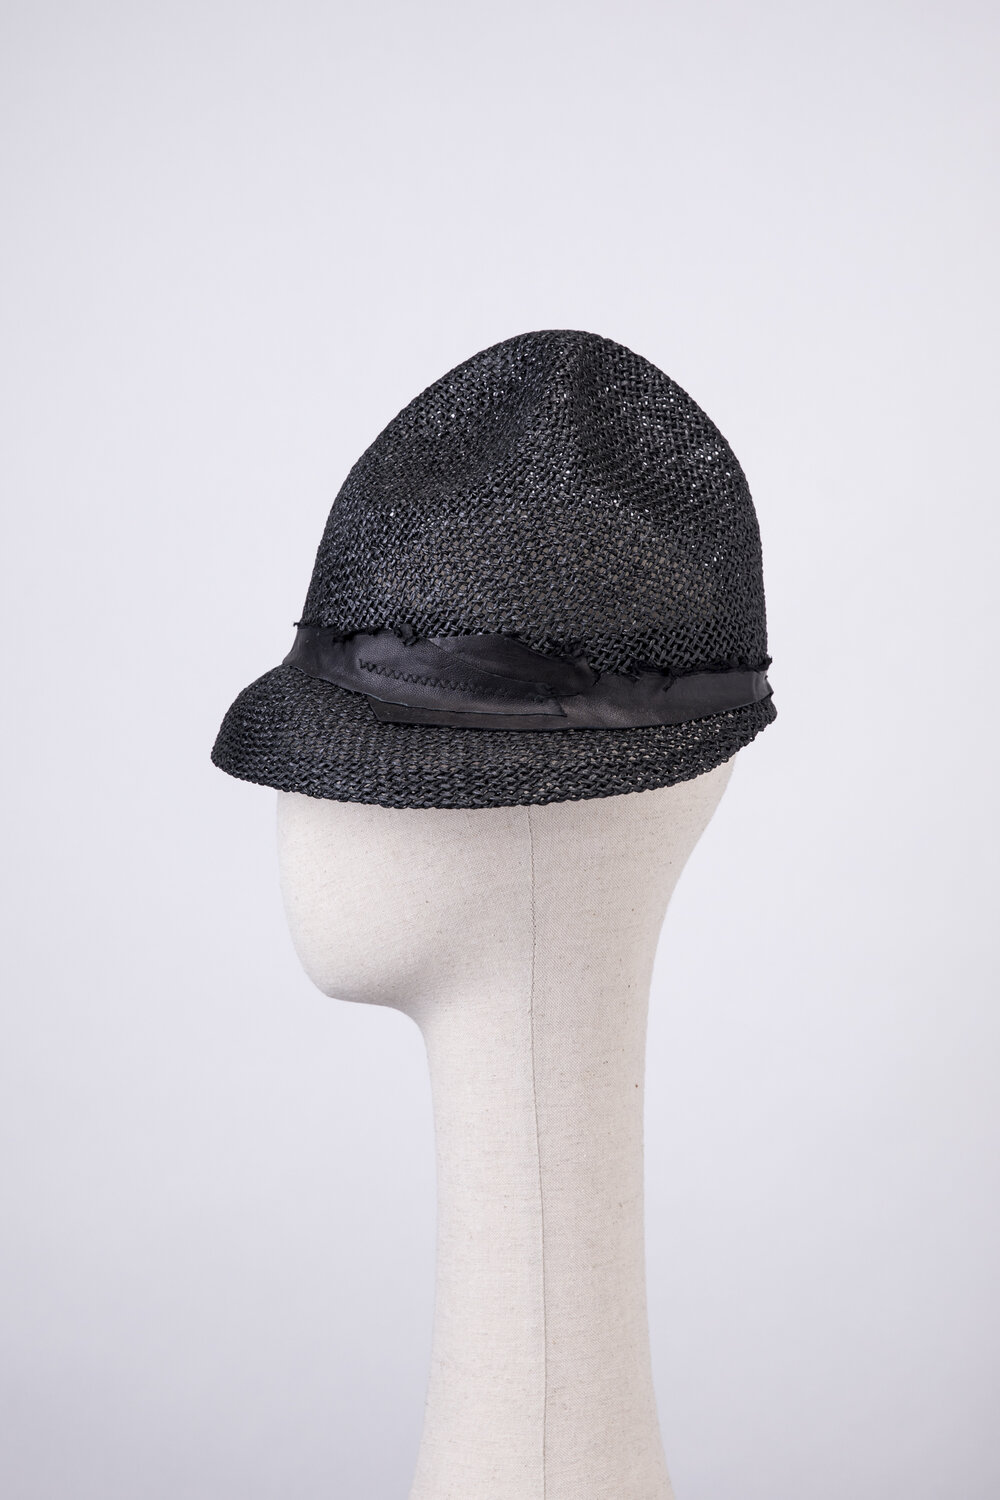 Black GA hat